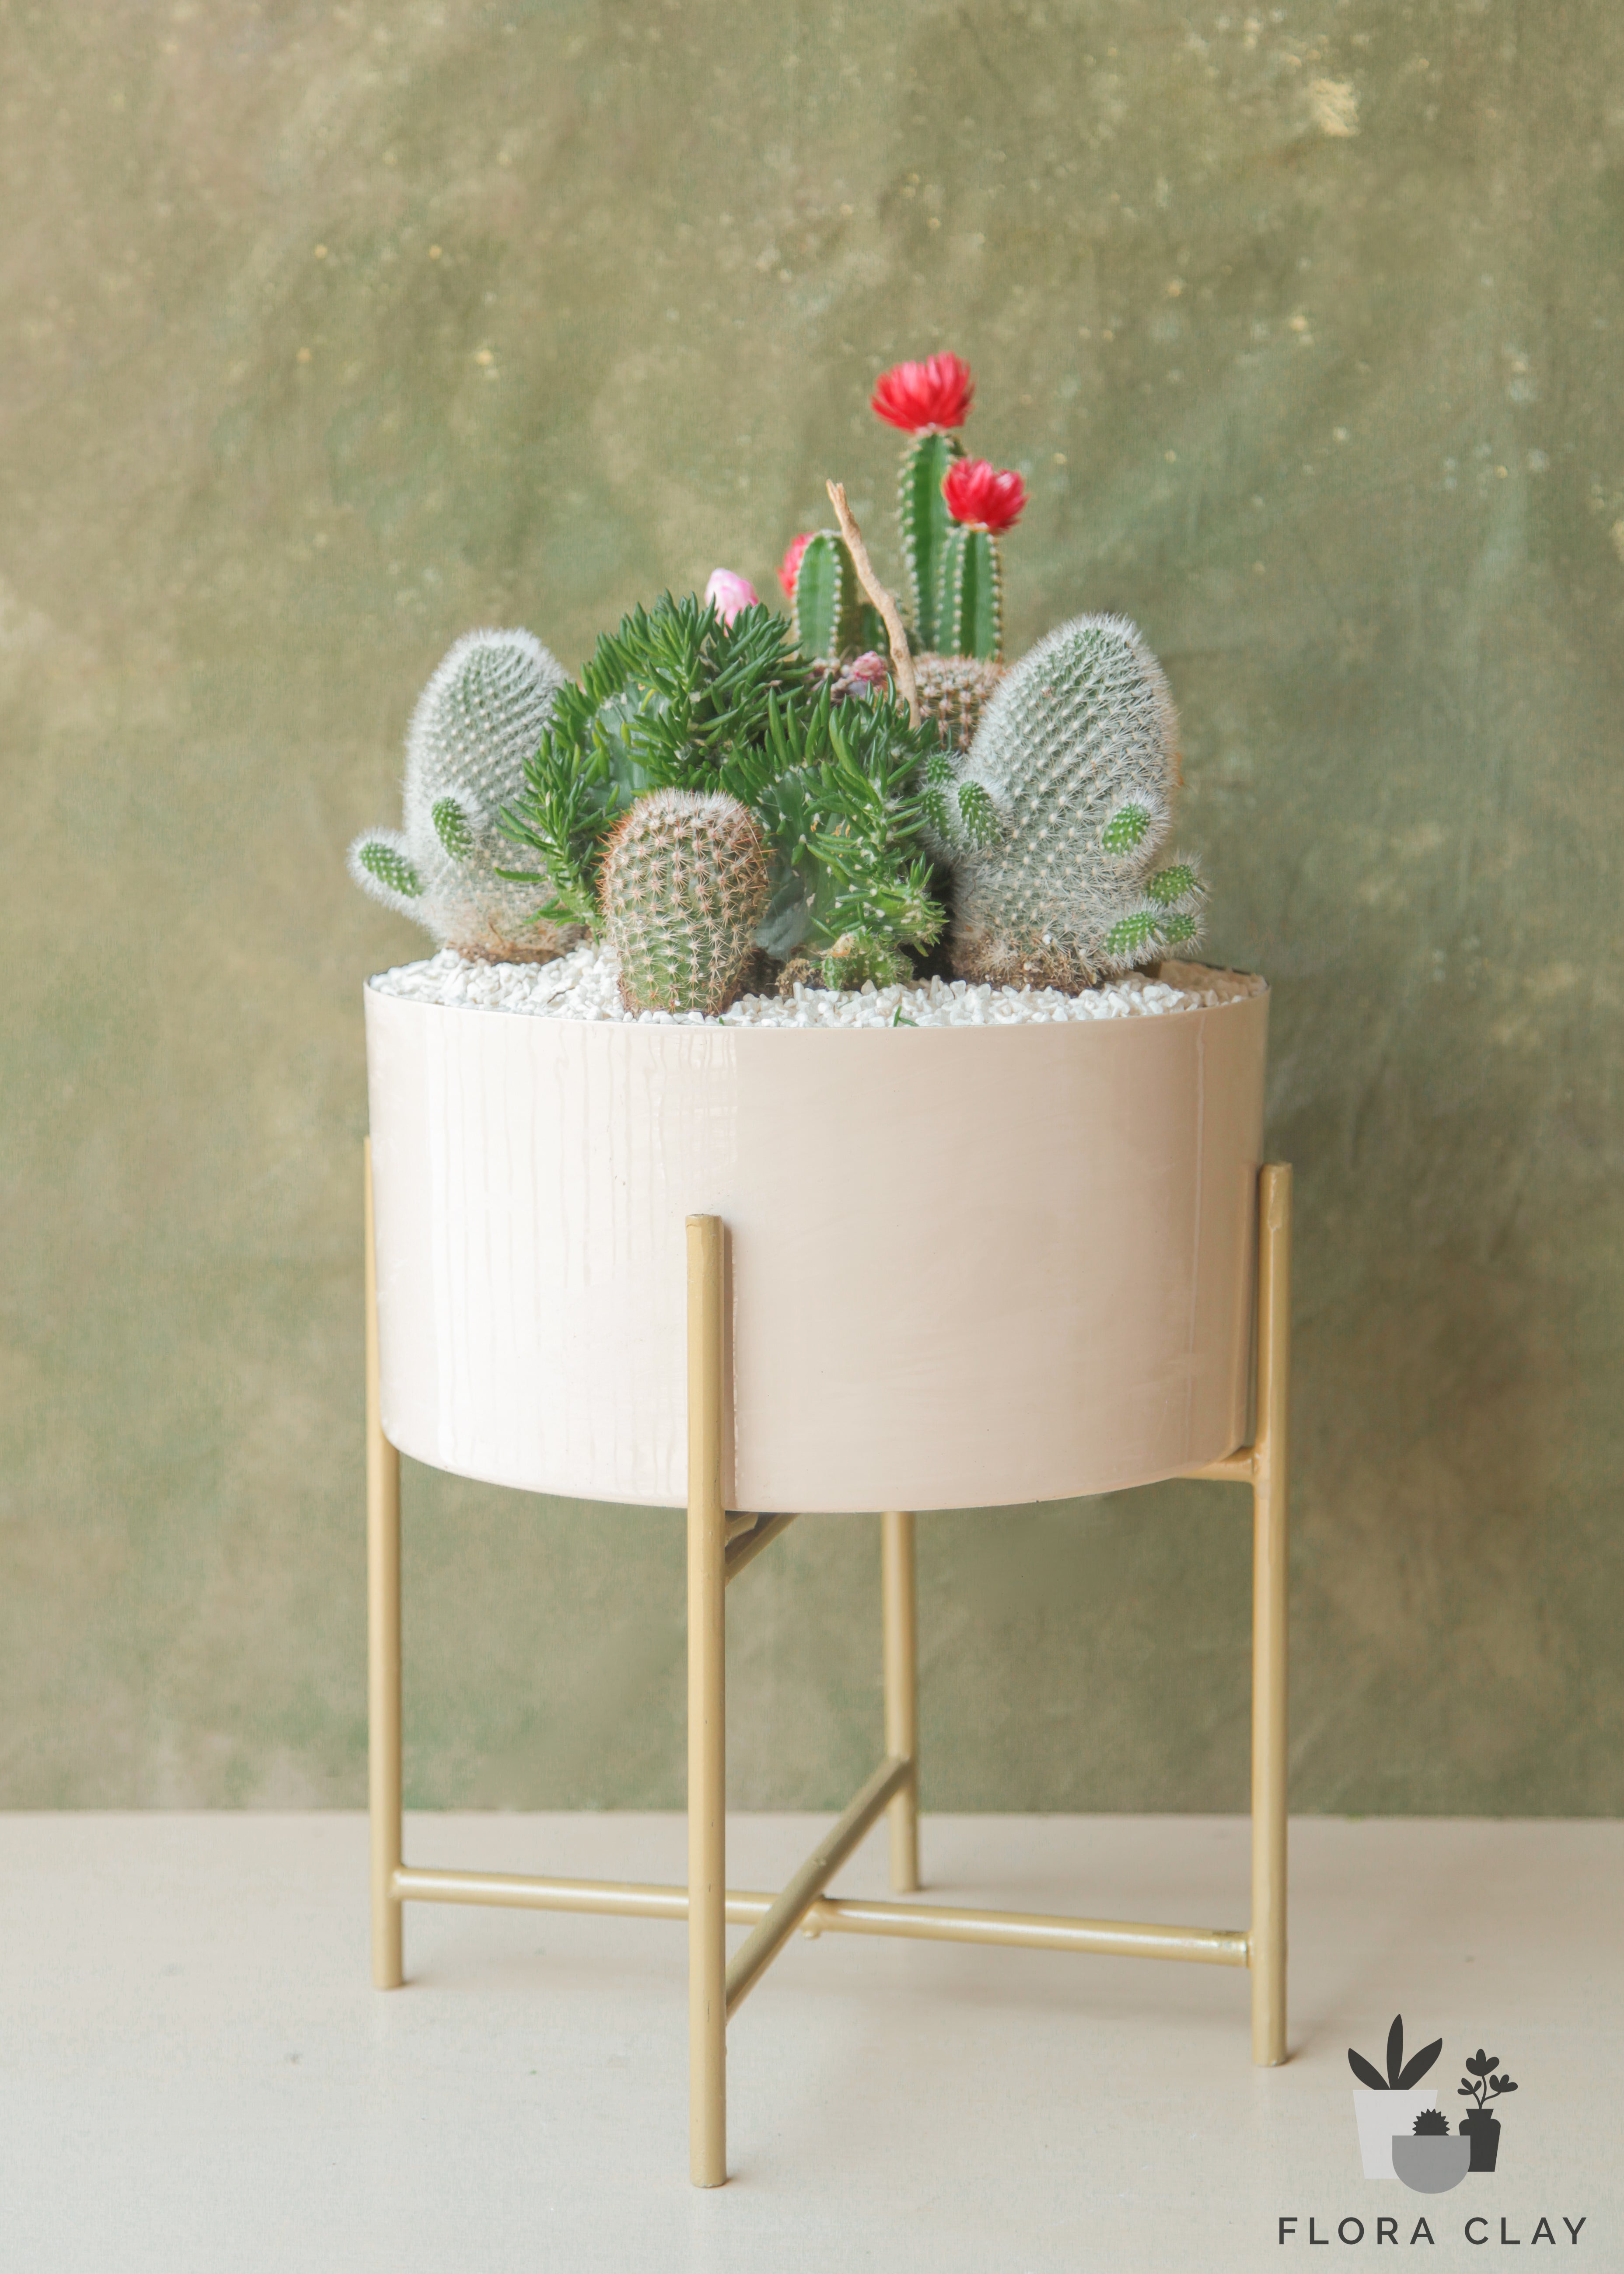 tranquility-cactus-arrangement-floraclay-1.jpg